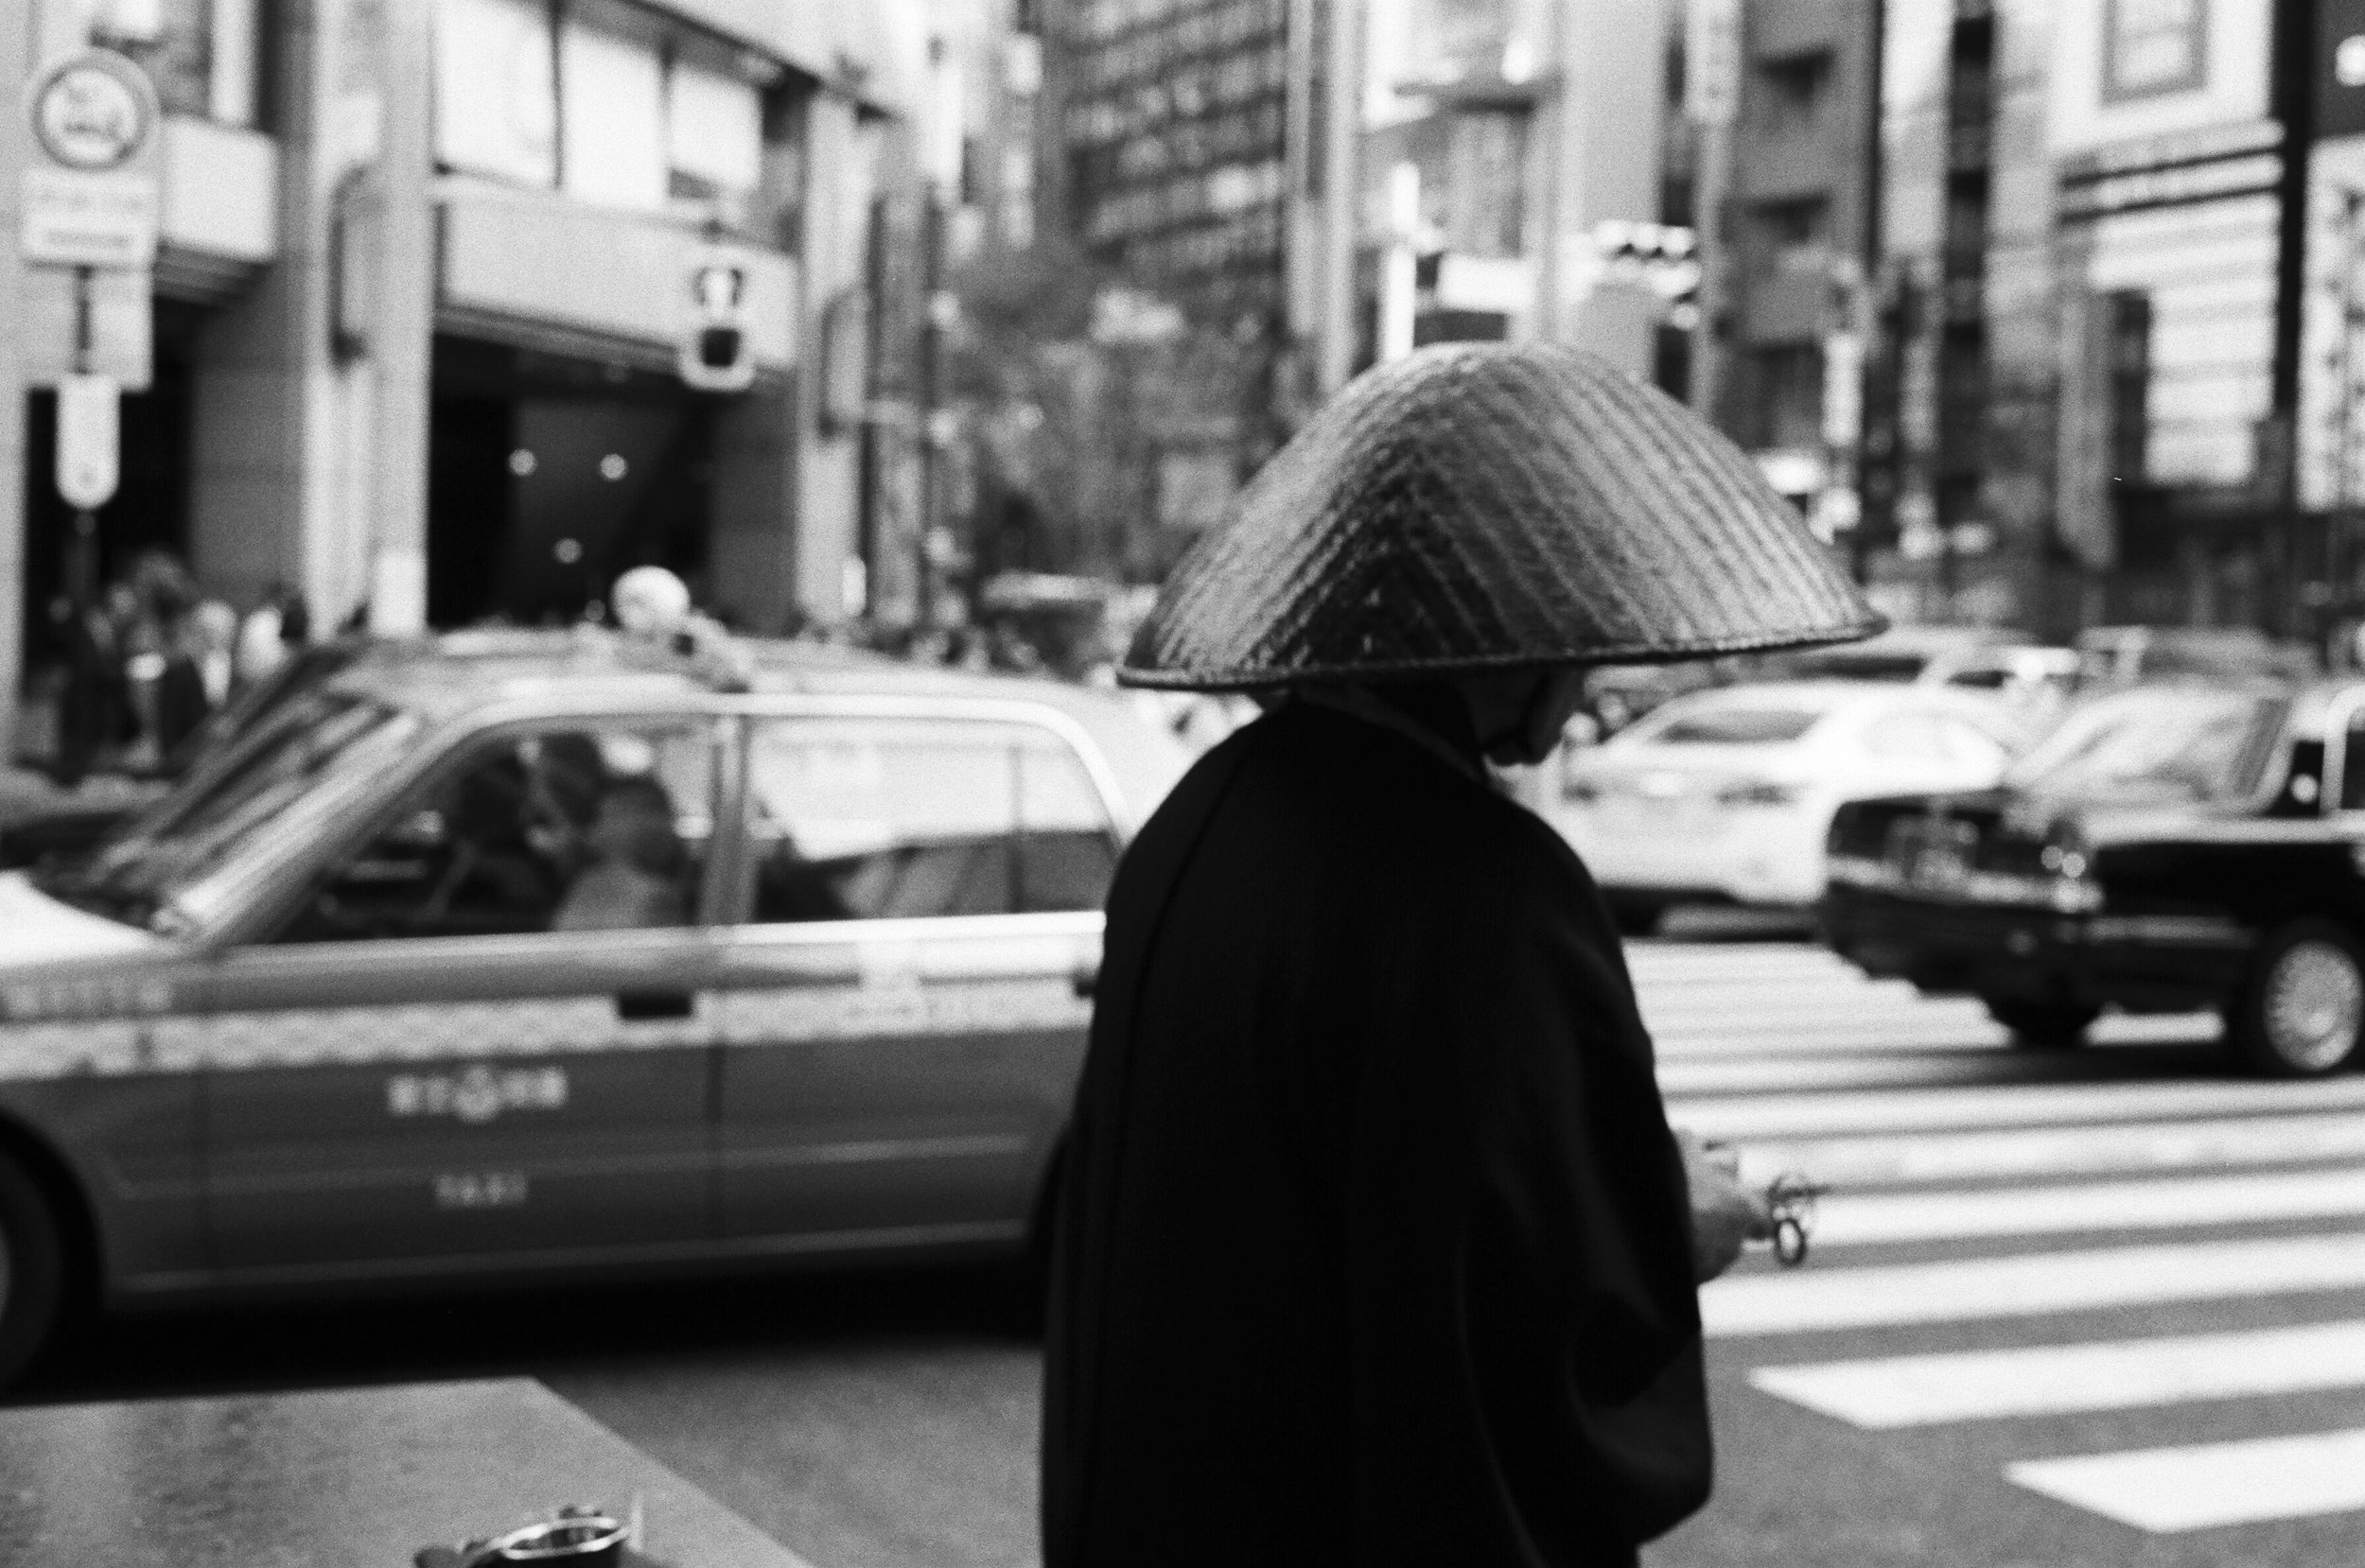 Tokyo Streets. Tokyo, 2017 / Leica M6 35mm